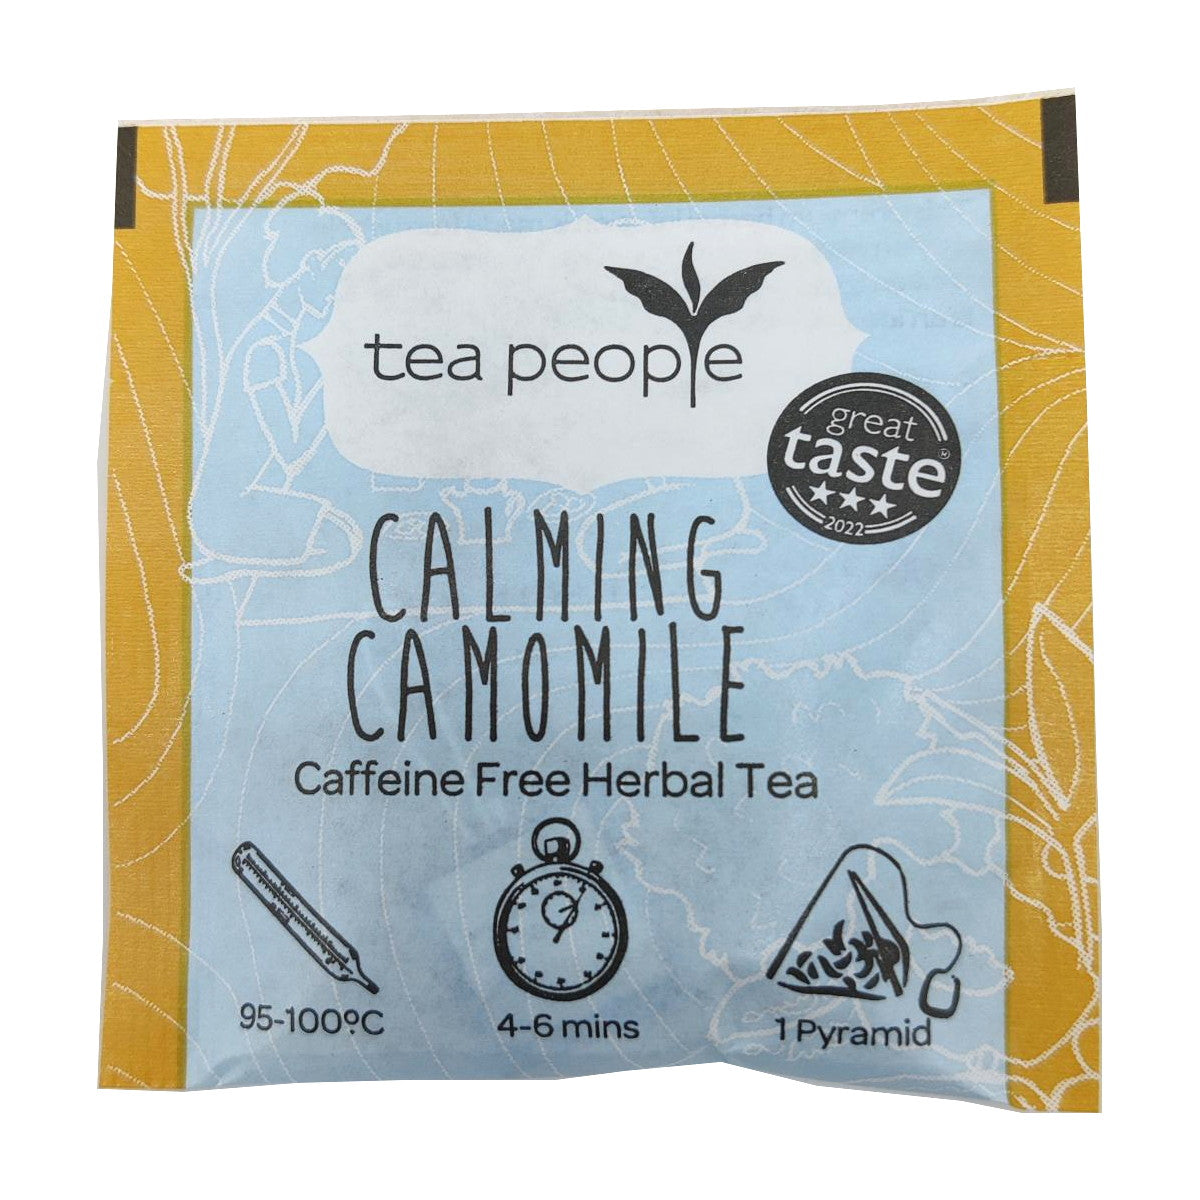 Calming Camomile - Herbal Tea Envelopes - 1 Tea Envelope